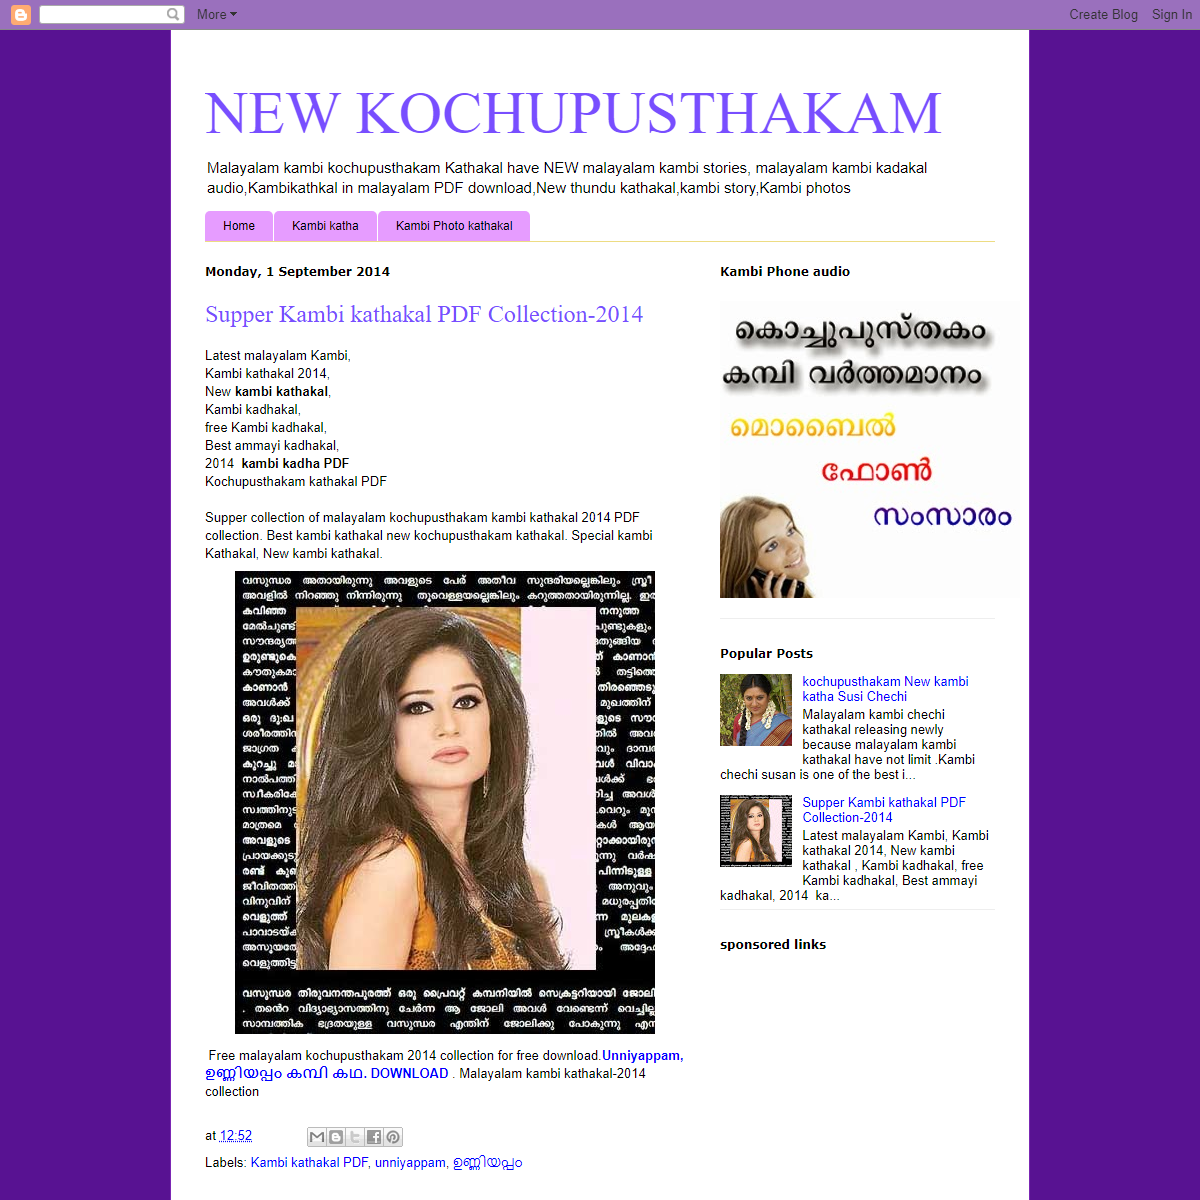 A complete backup of https://newkochupusthakam.blogspot.com/2014/09/supper-kambi-kathakal-pdf-collection.html